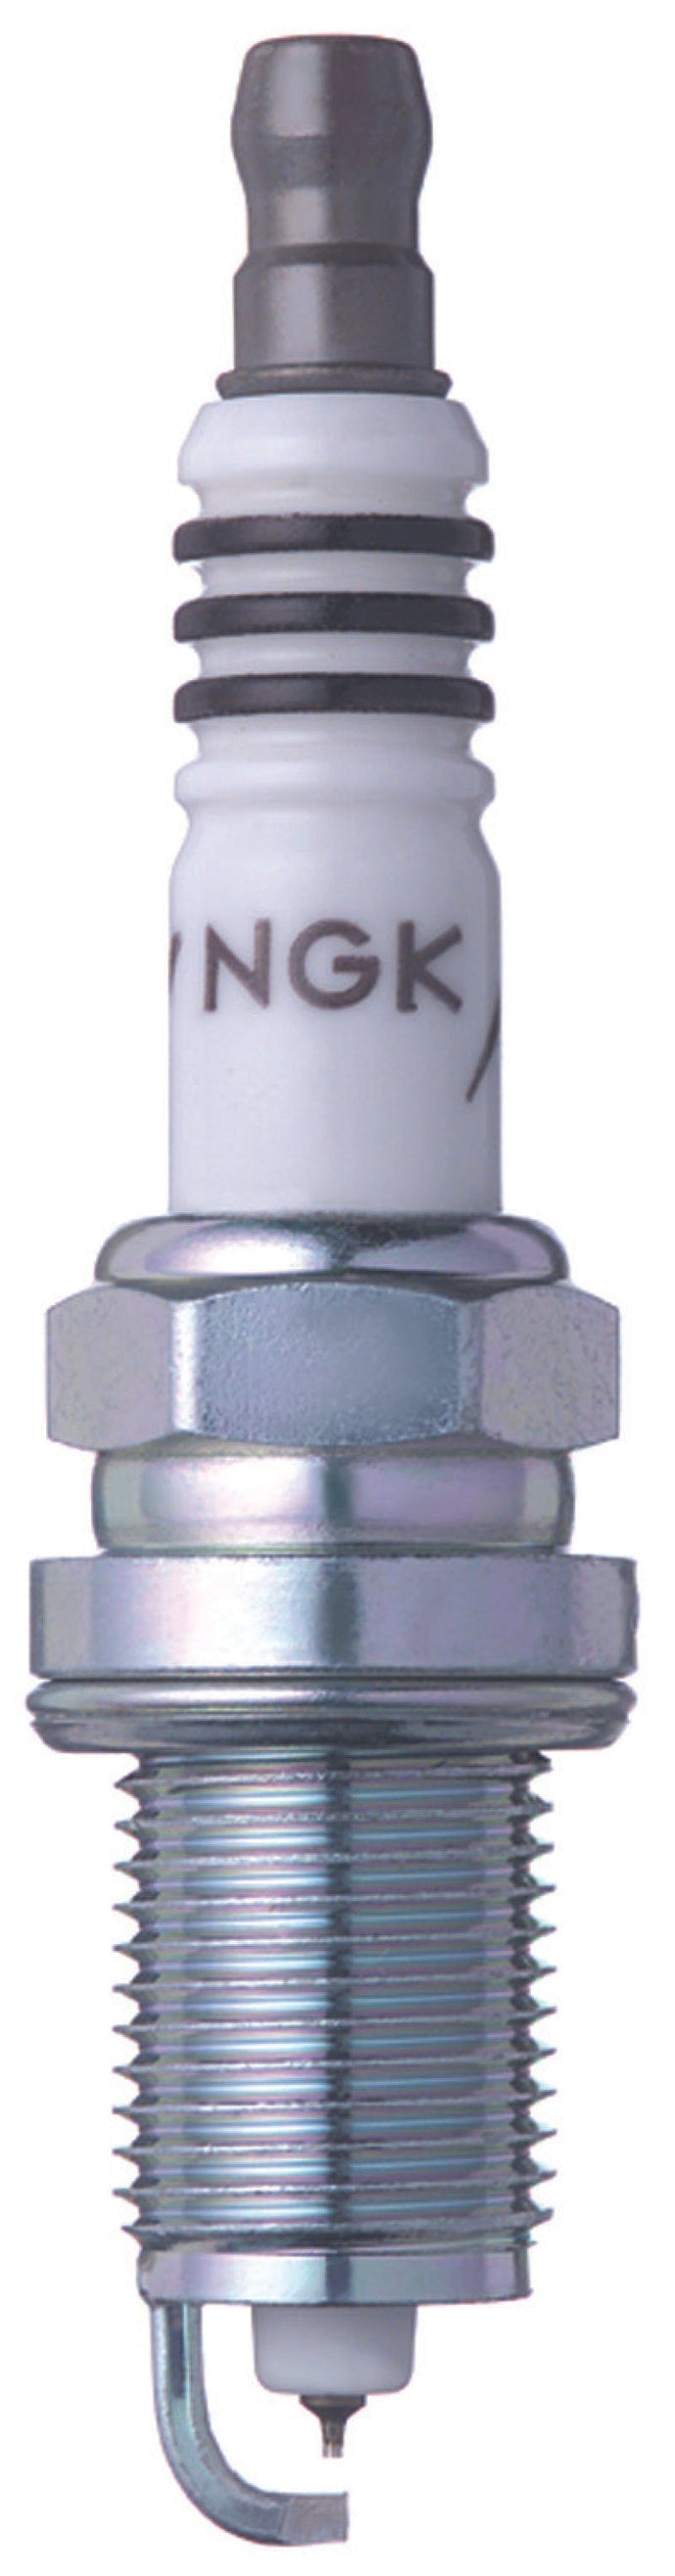 NGK NGK4294